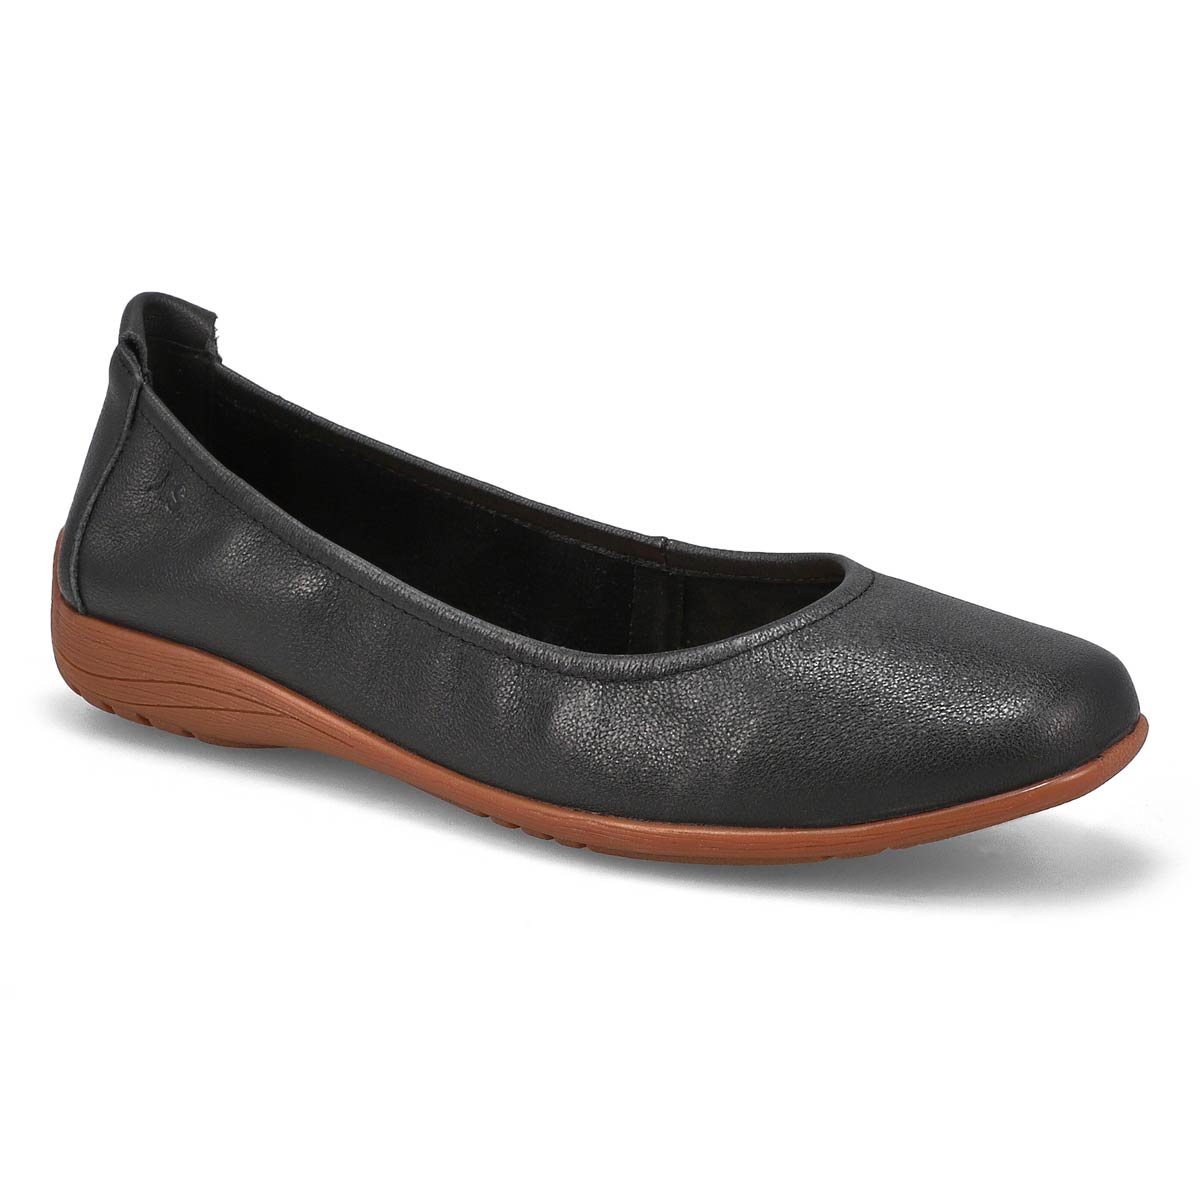 Josef Seibel Women's Fenja 01 Shoe - Black | SoftMoc.com